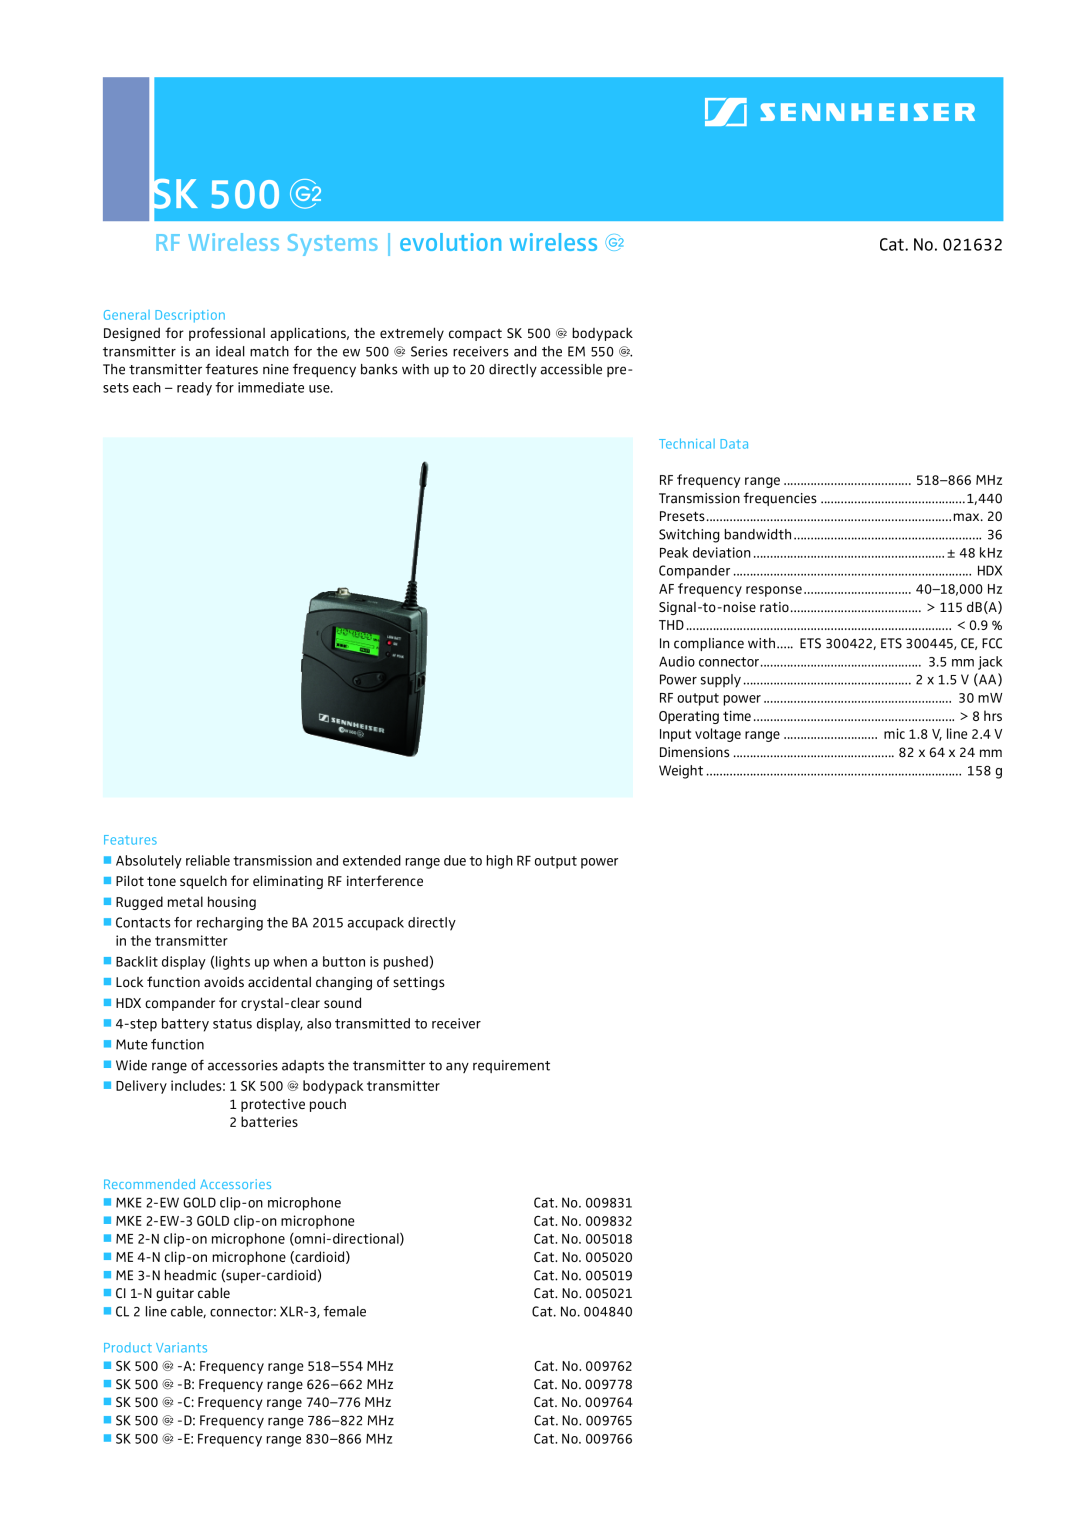 Sennheiser dimensions SK 500 g, RF Wireless Systems evolution wireless g, Cat. No, General Description, Technical Data 